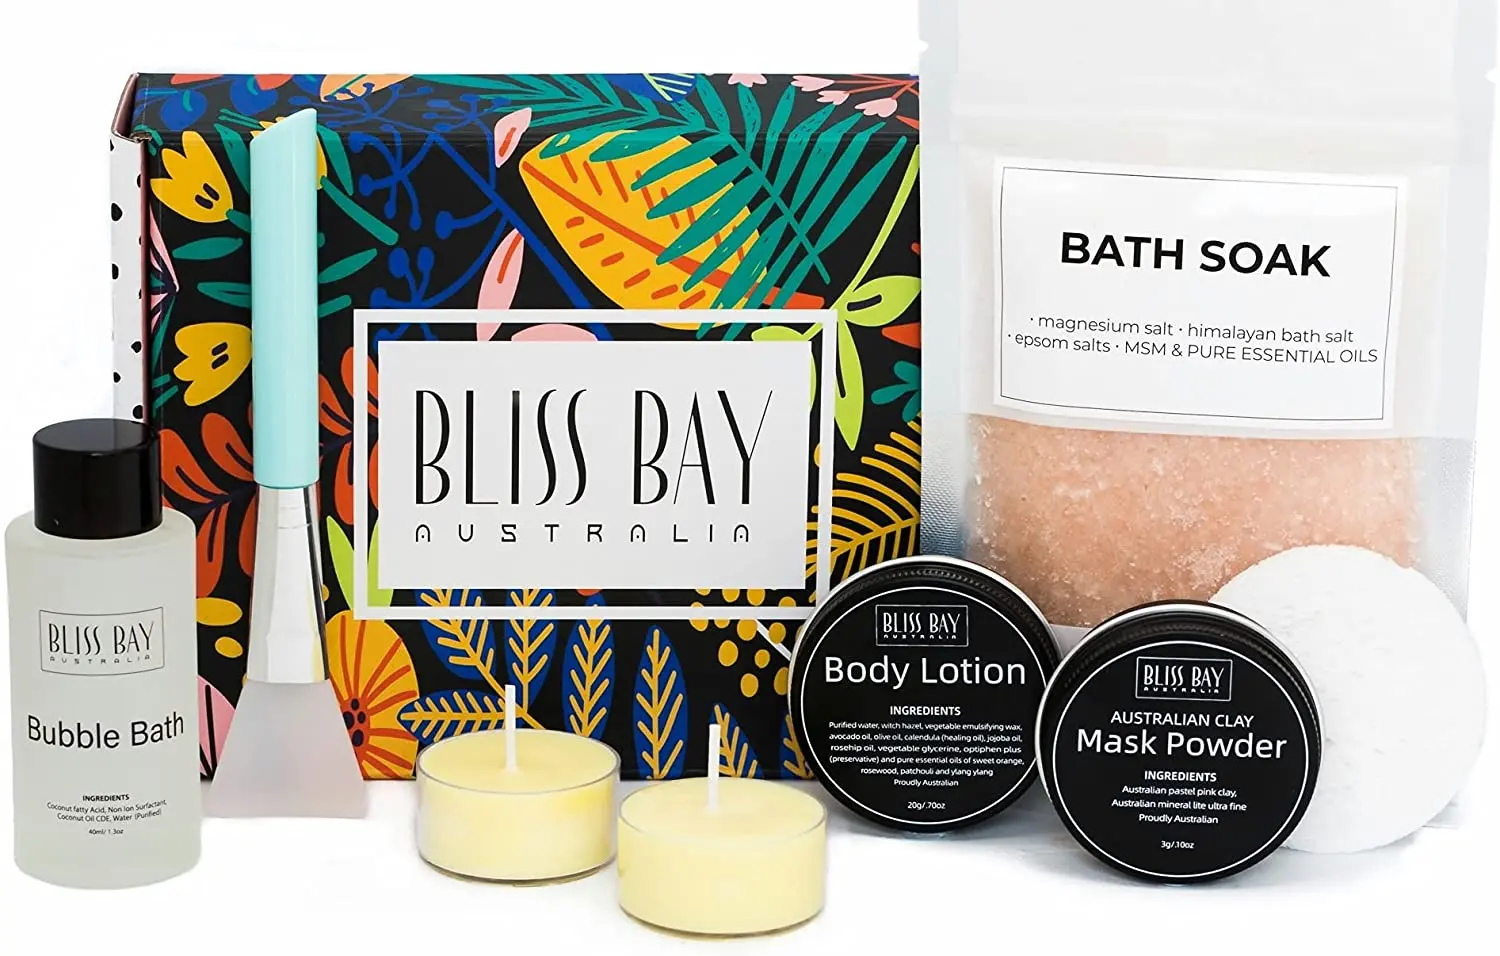 Bliss Bay Australia Bath Set: $ 39 at Amazon